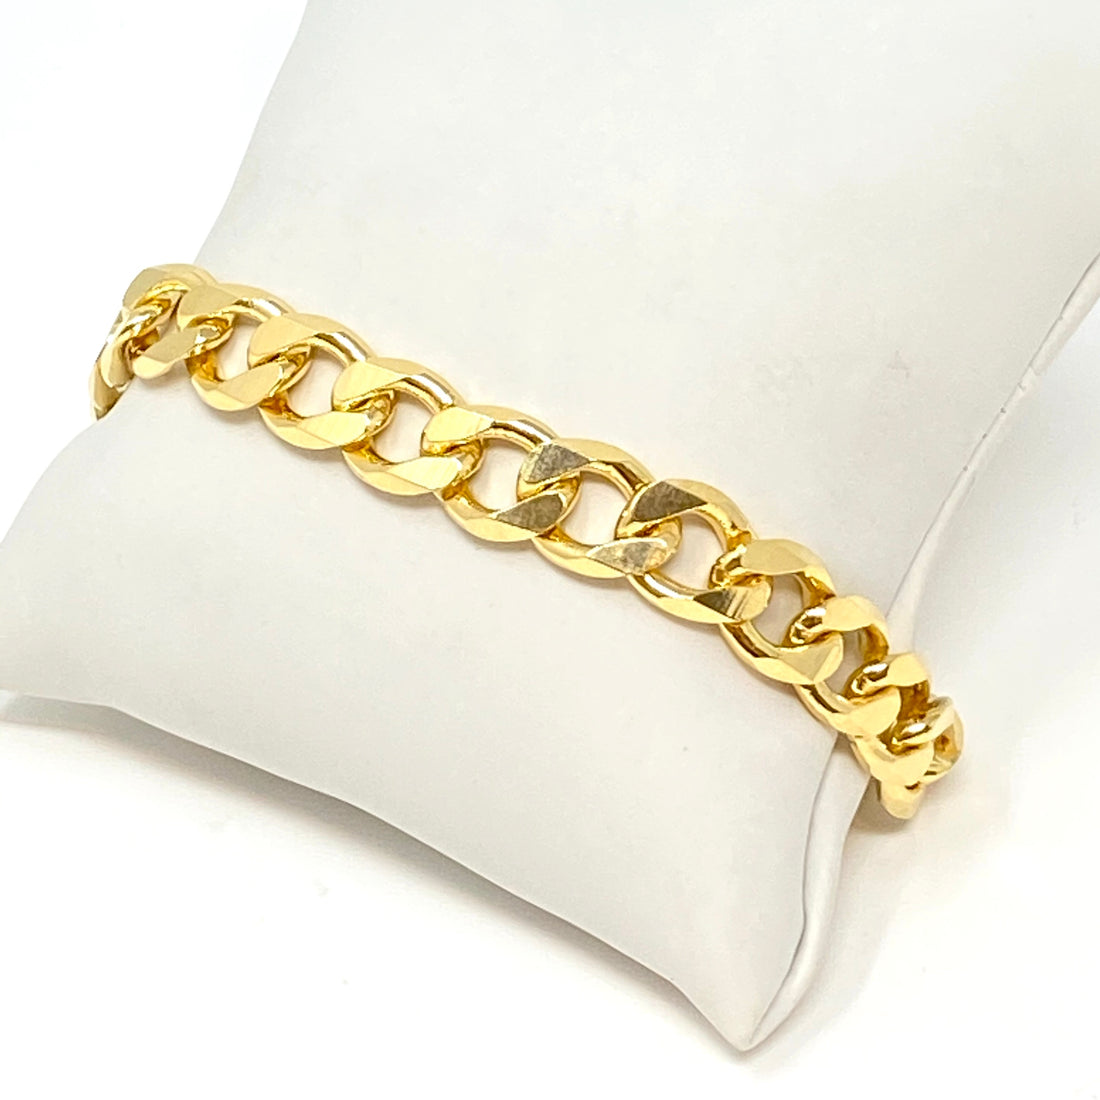 August Chainlink Bracelet in Gold